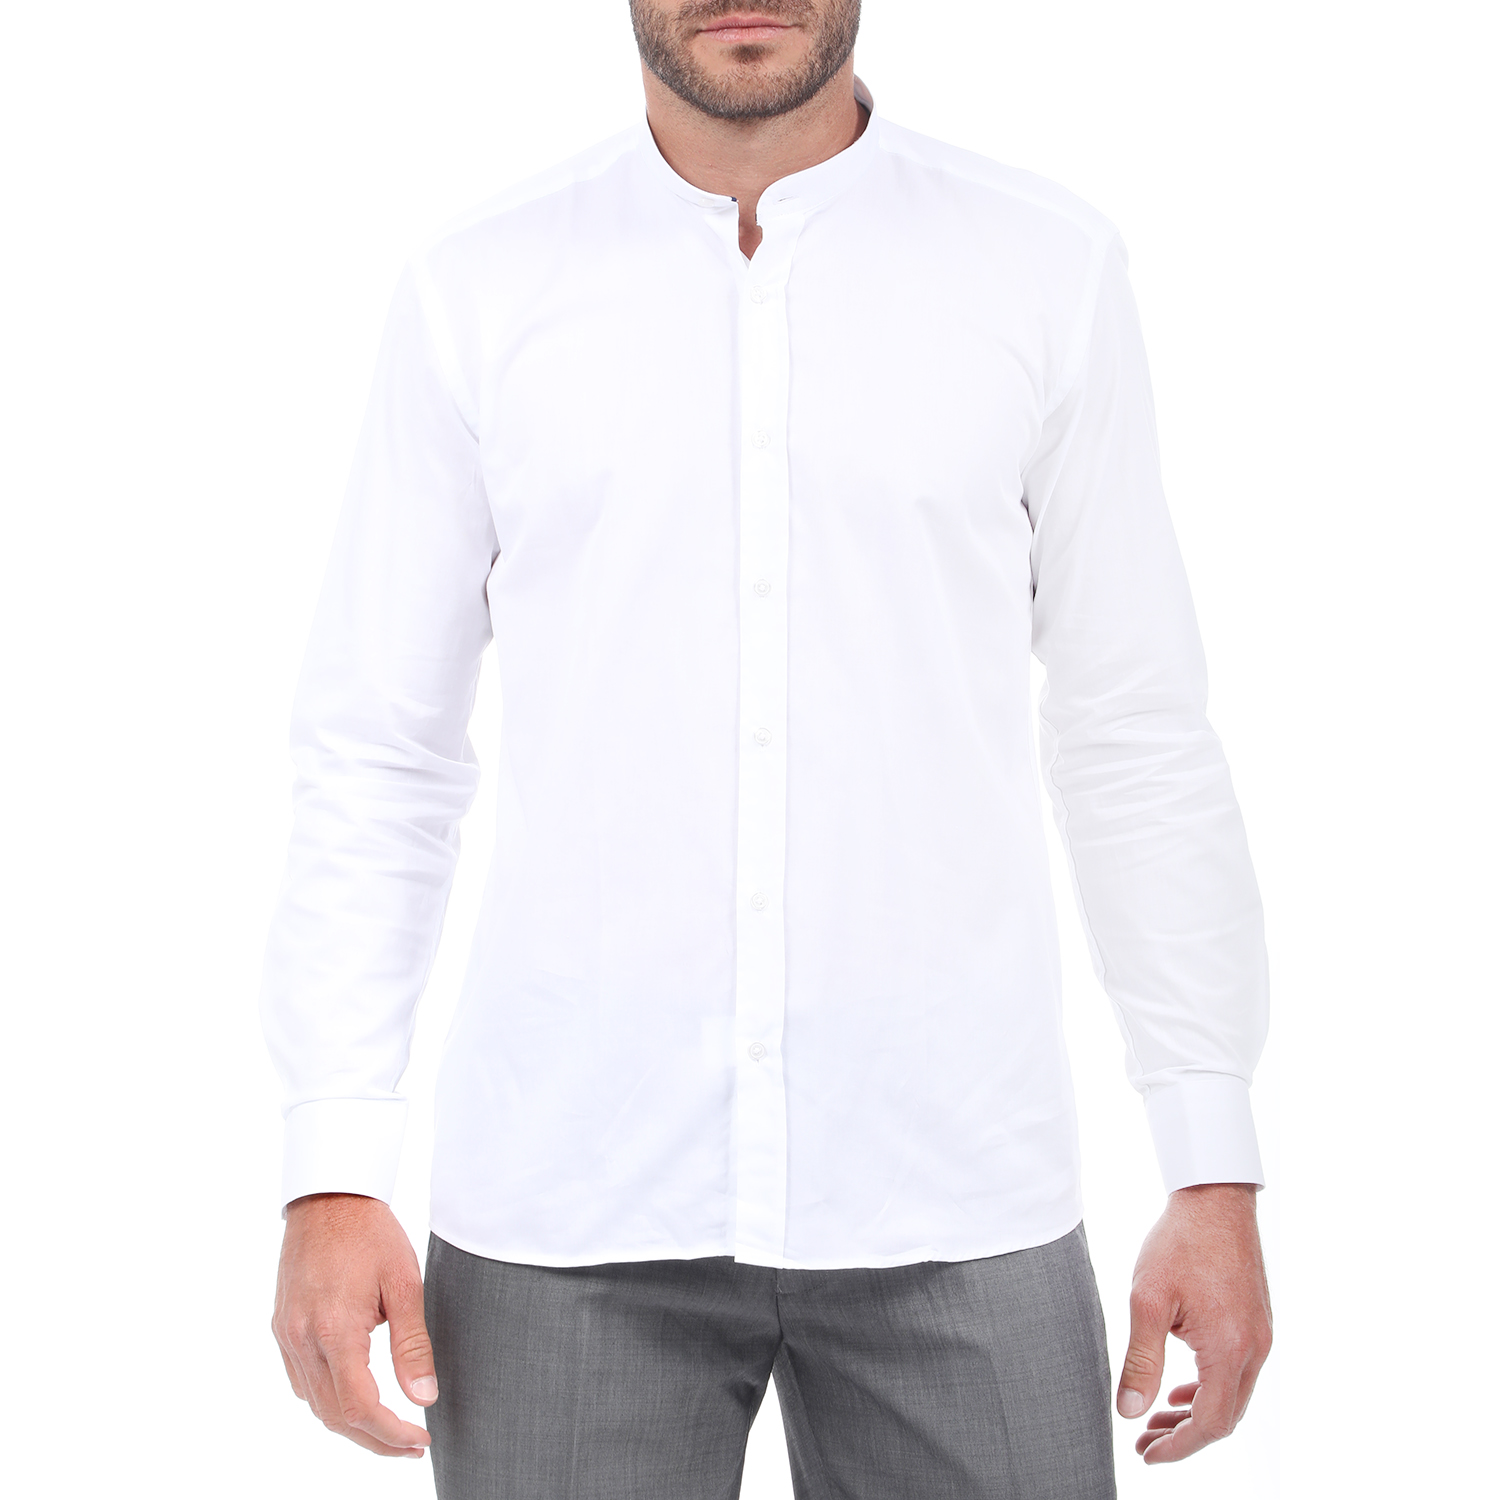 MARTIN & CO MARTIN & CO - Ανδρικό πουκάμισο MARTIN & CO SLIM FIT MAO λευκό